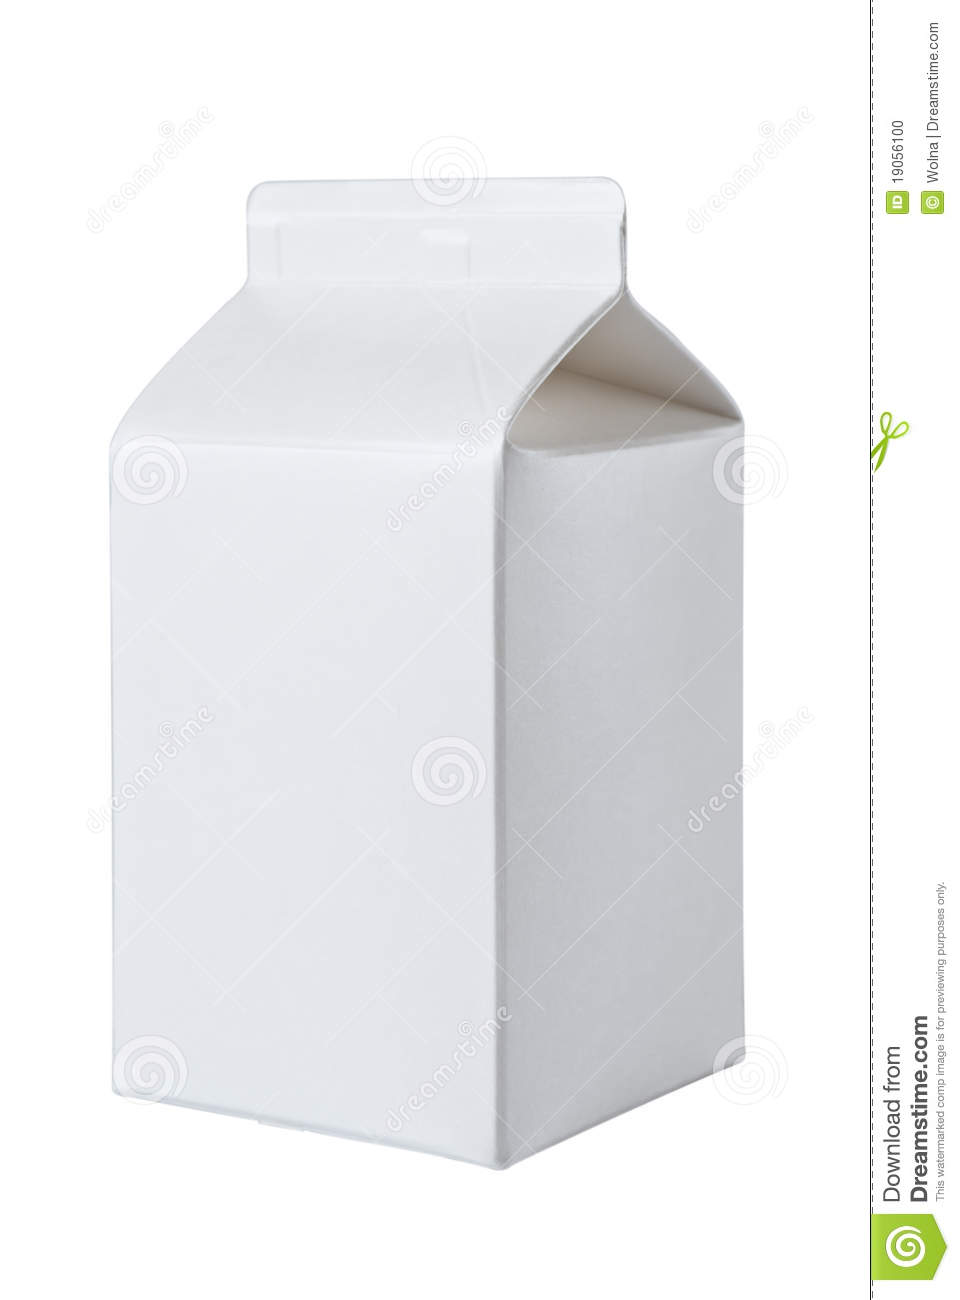 Milk Box Per Half Liter On White Stock Photo   Image  19056100